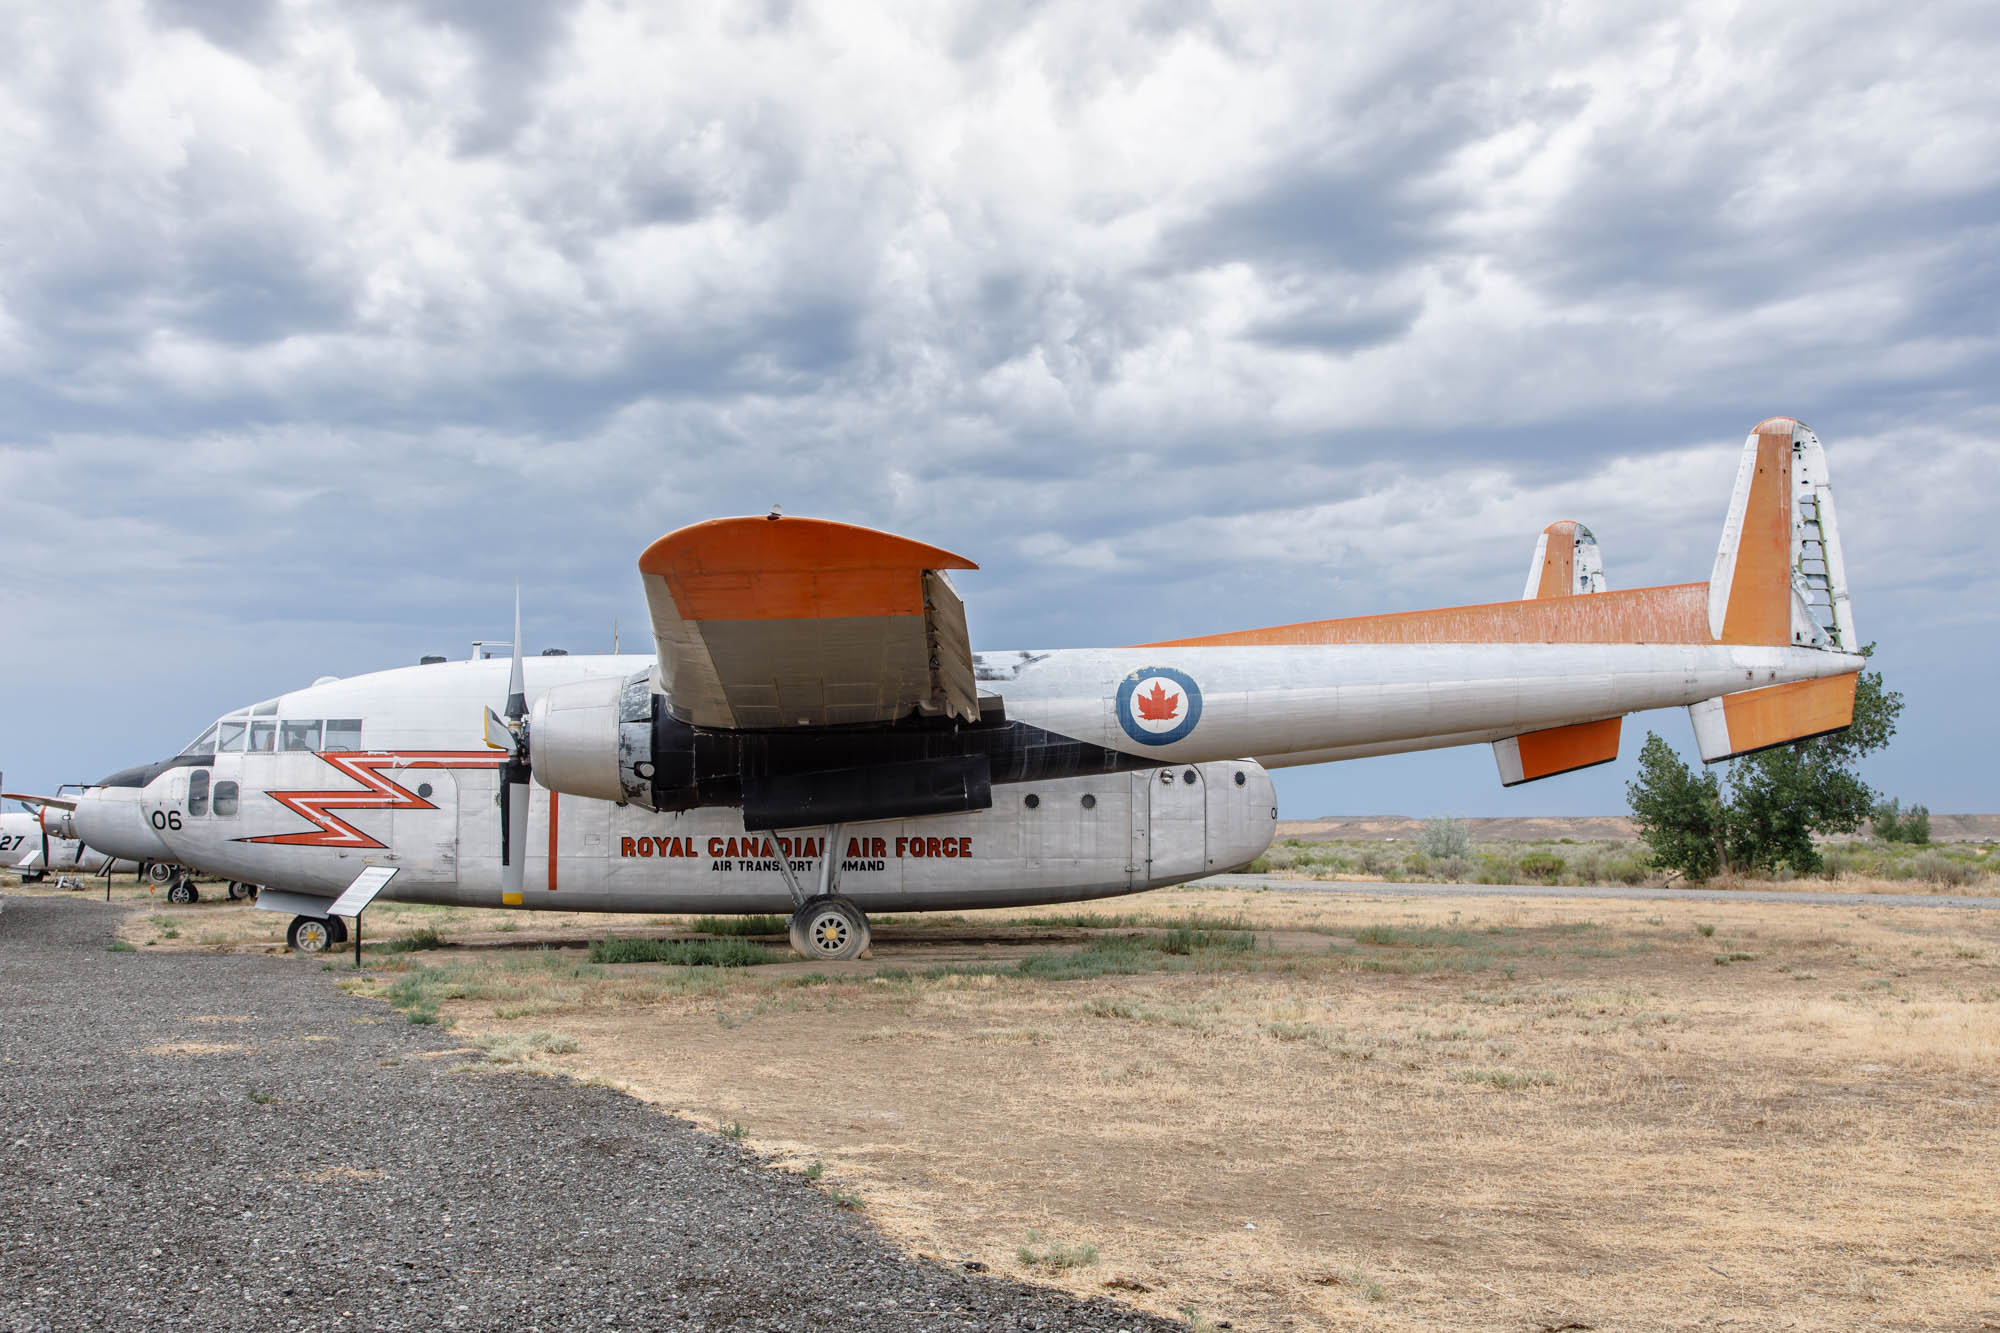 Greybull Aircraft Museum